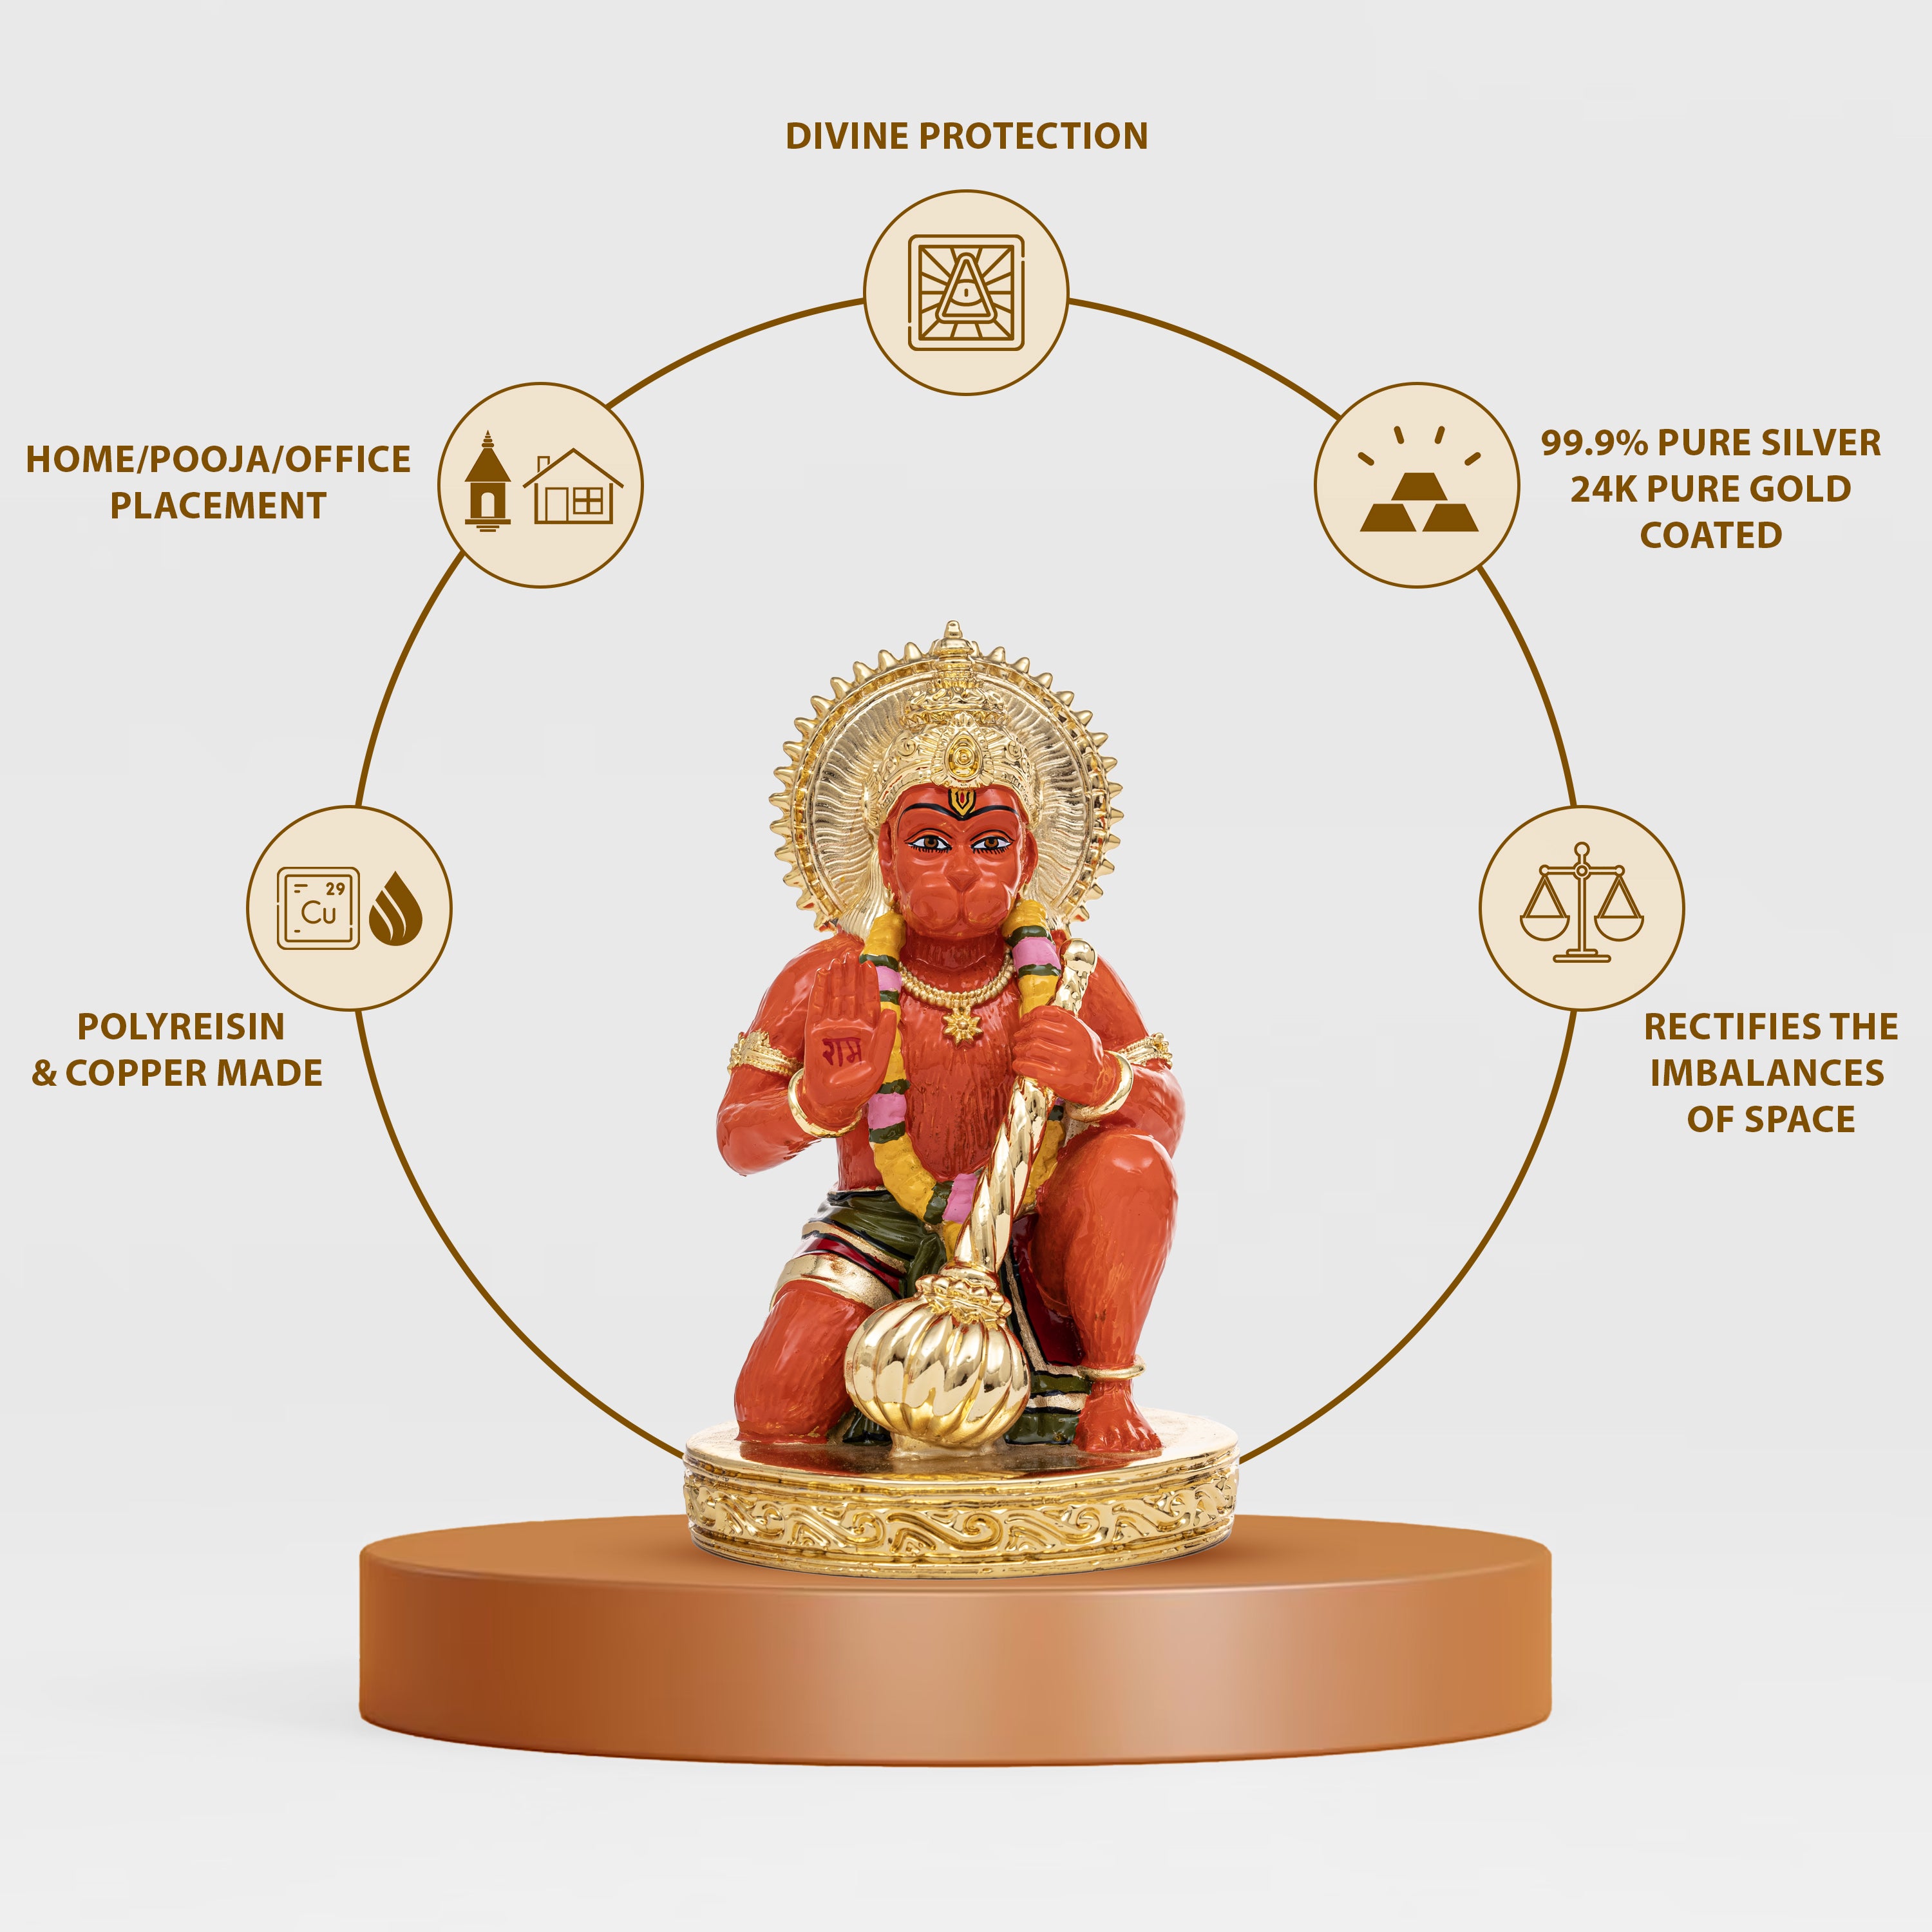 Idolkart 24k Pure Gold Coated Hanuman Idol for Pooja Room | Sitting Bajrangbali Murti for Home Office Car Dashboard | Hanuman Statue for Diwali House Warming Wedding Ram Katha